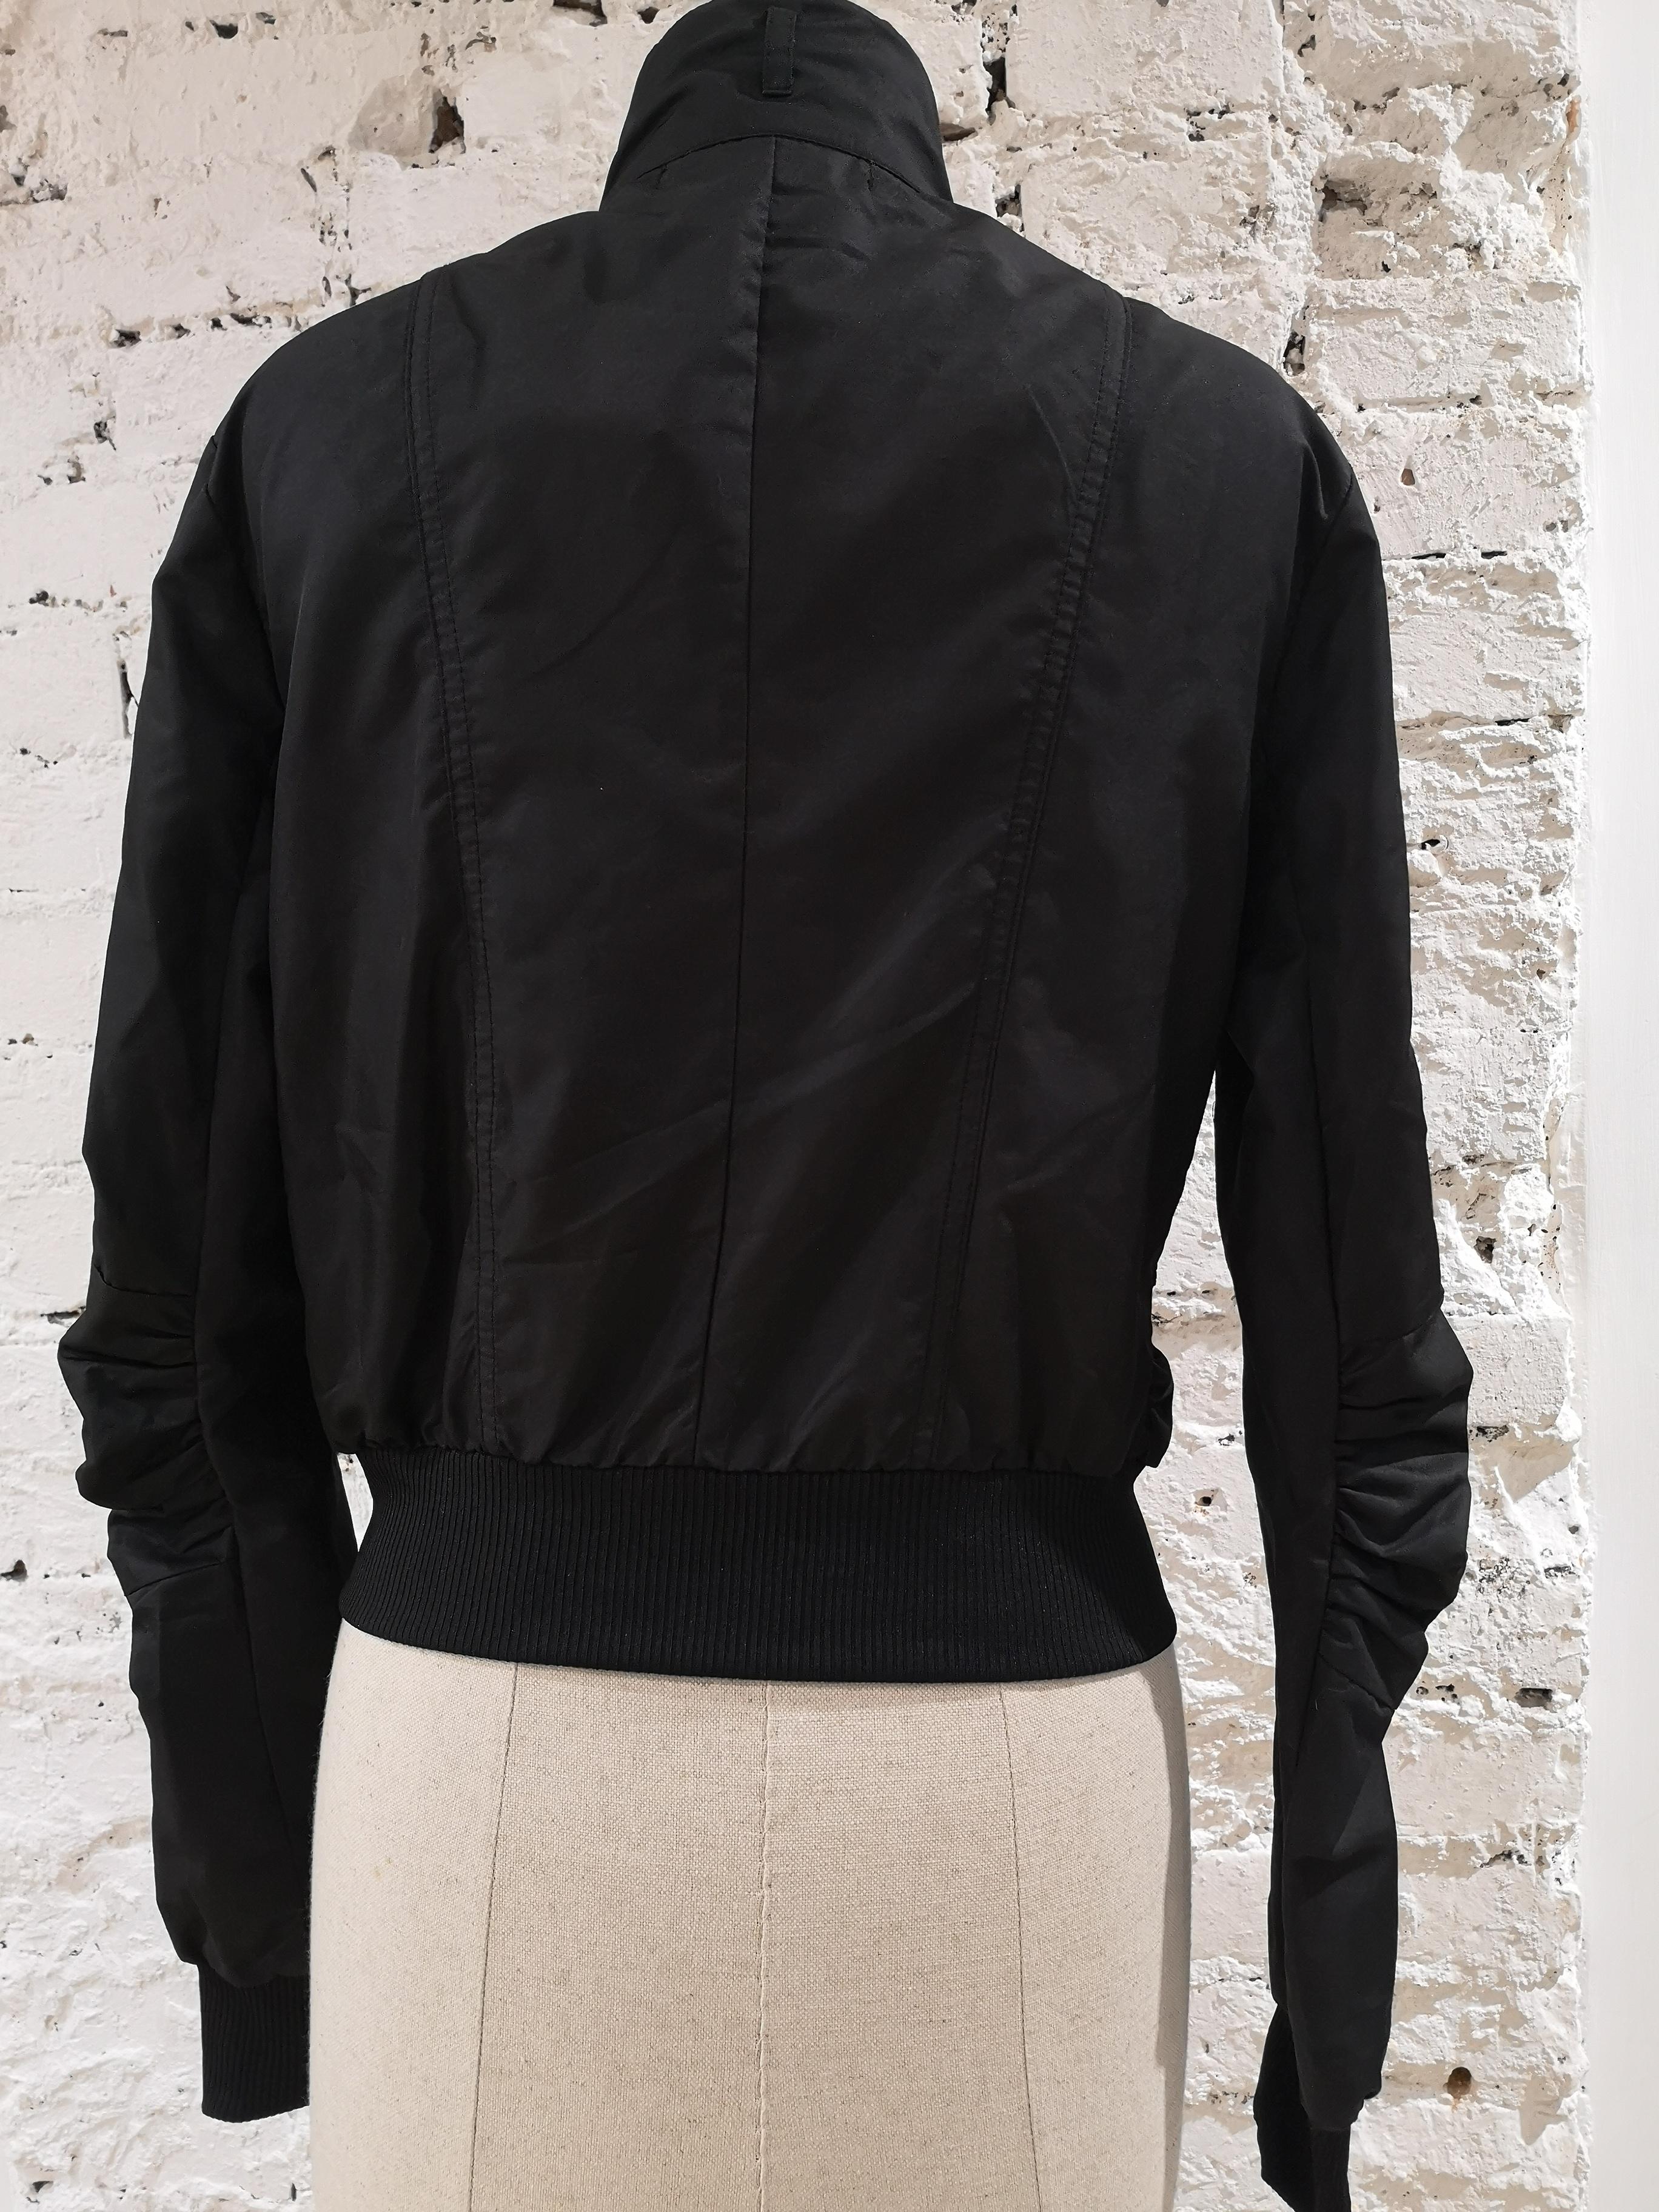 Morgan de toi black jacket
Size 3 (Medium)